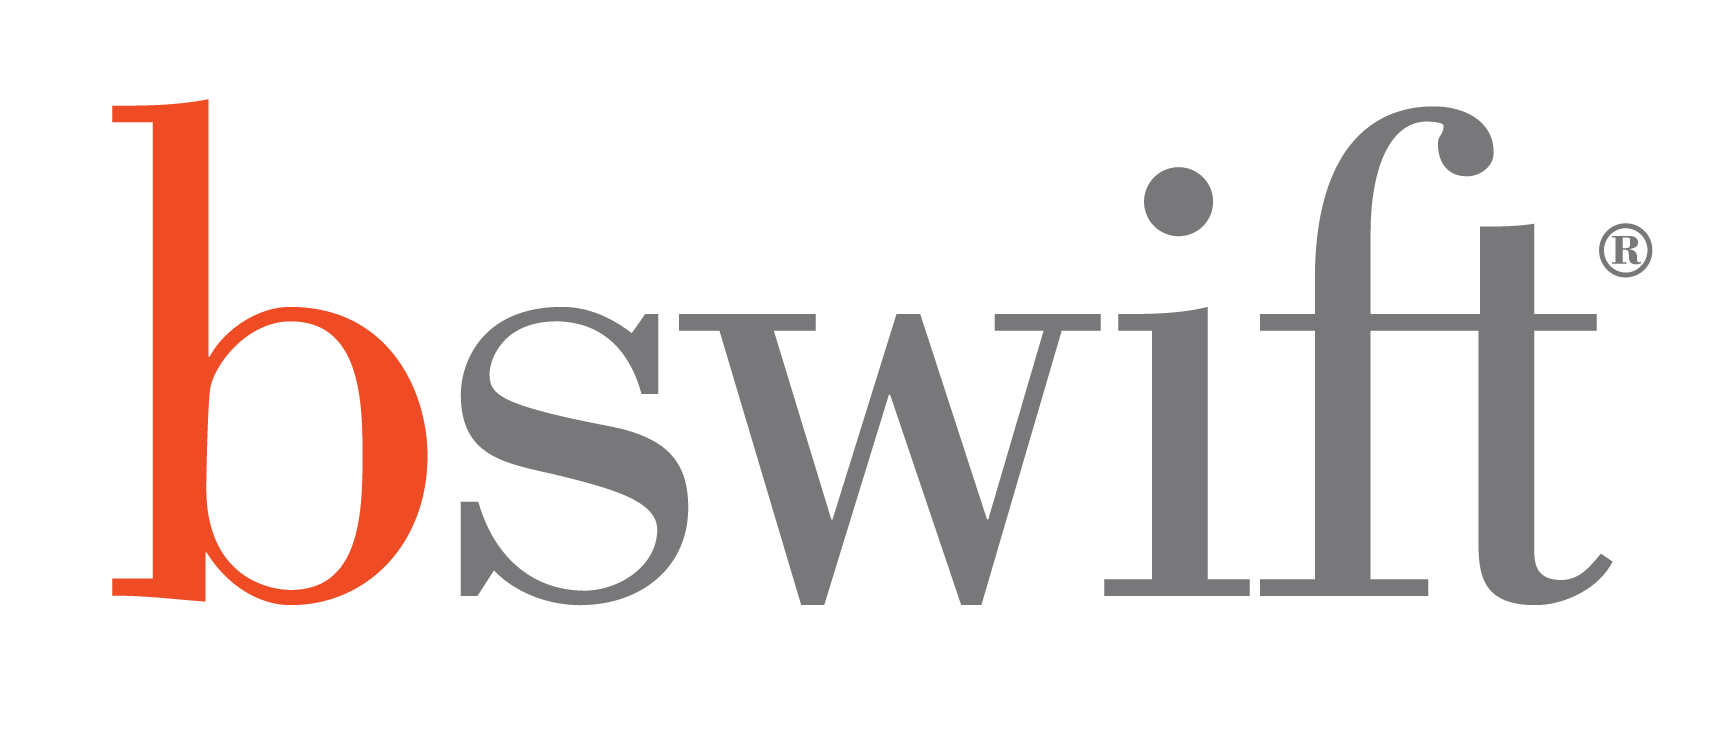 bswift-logo